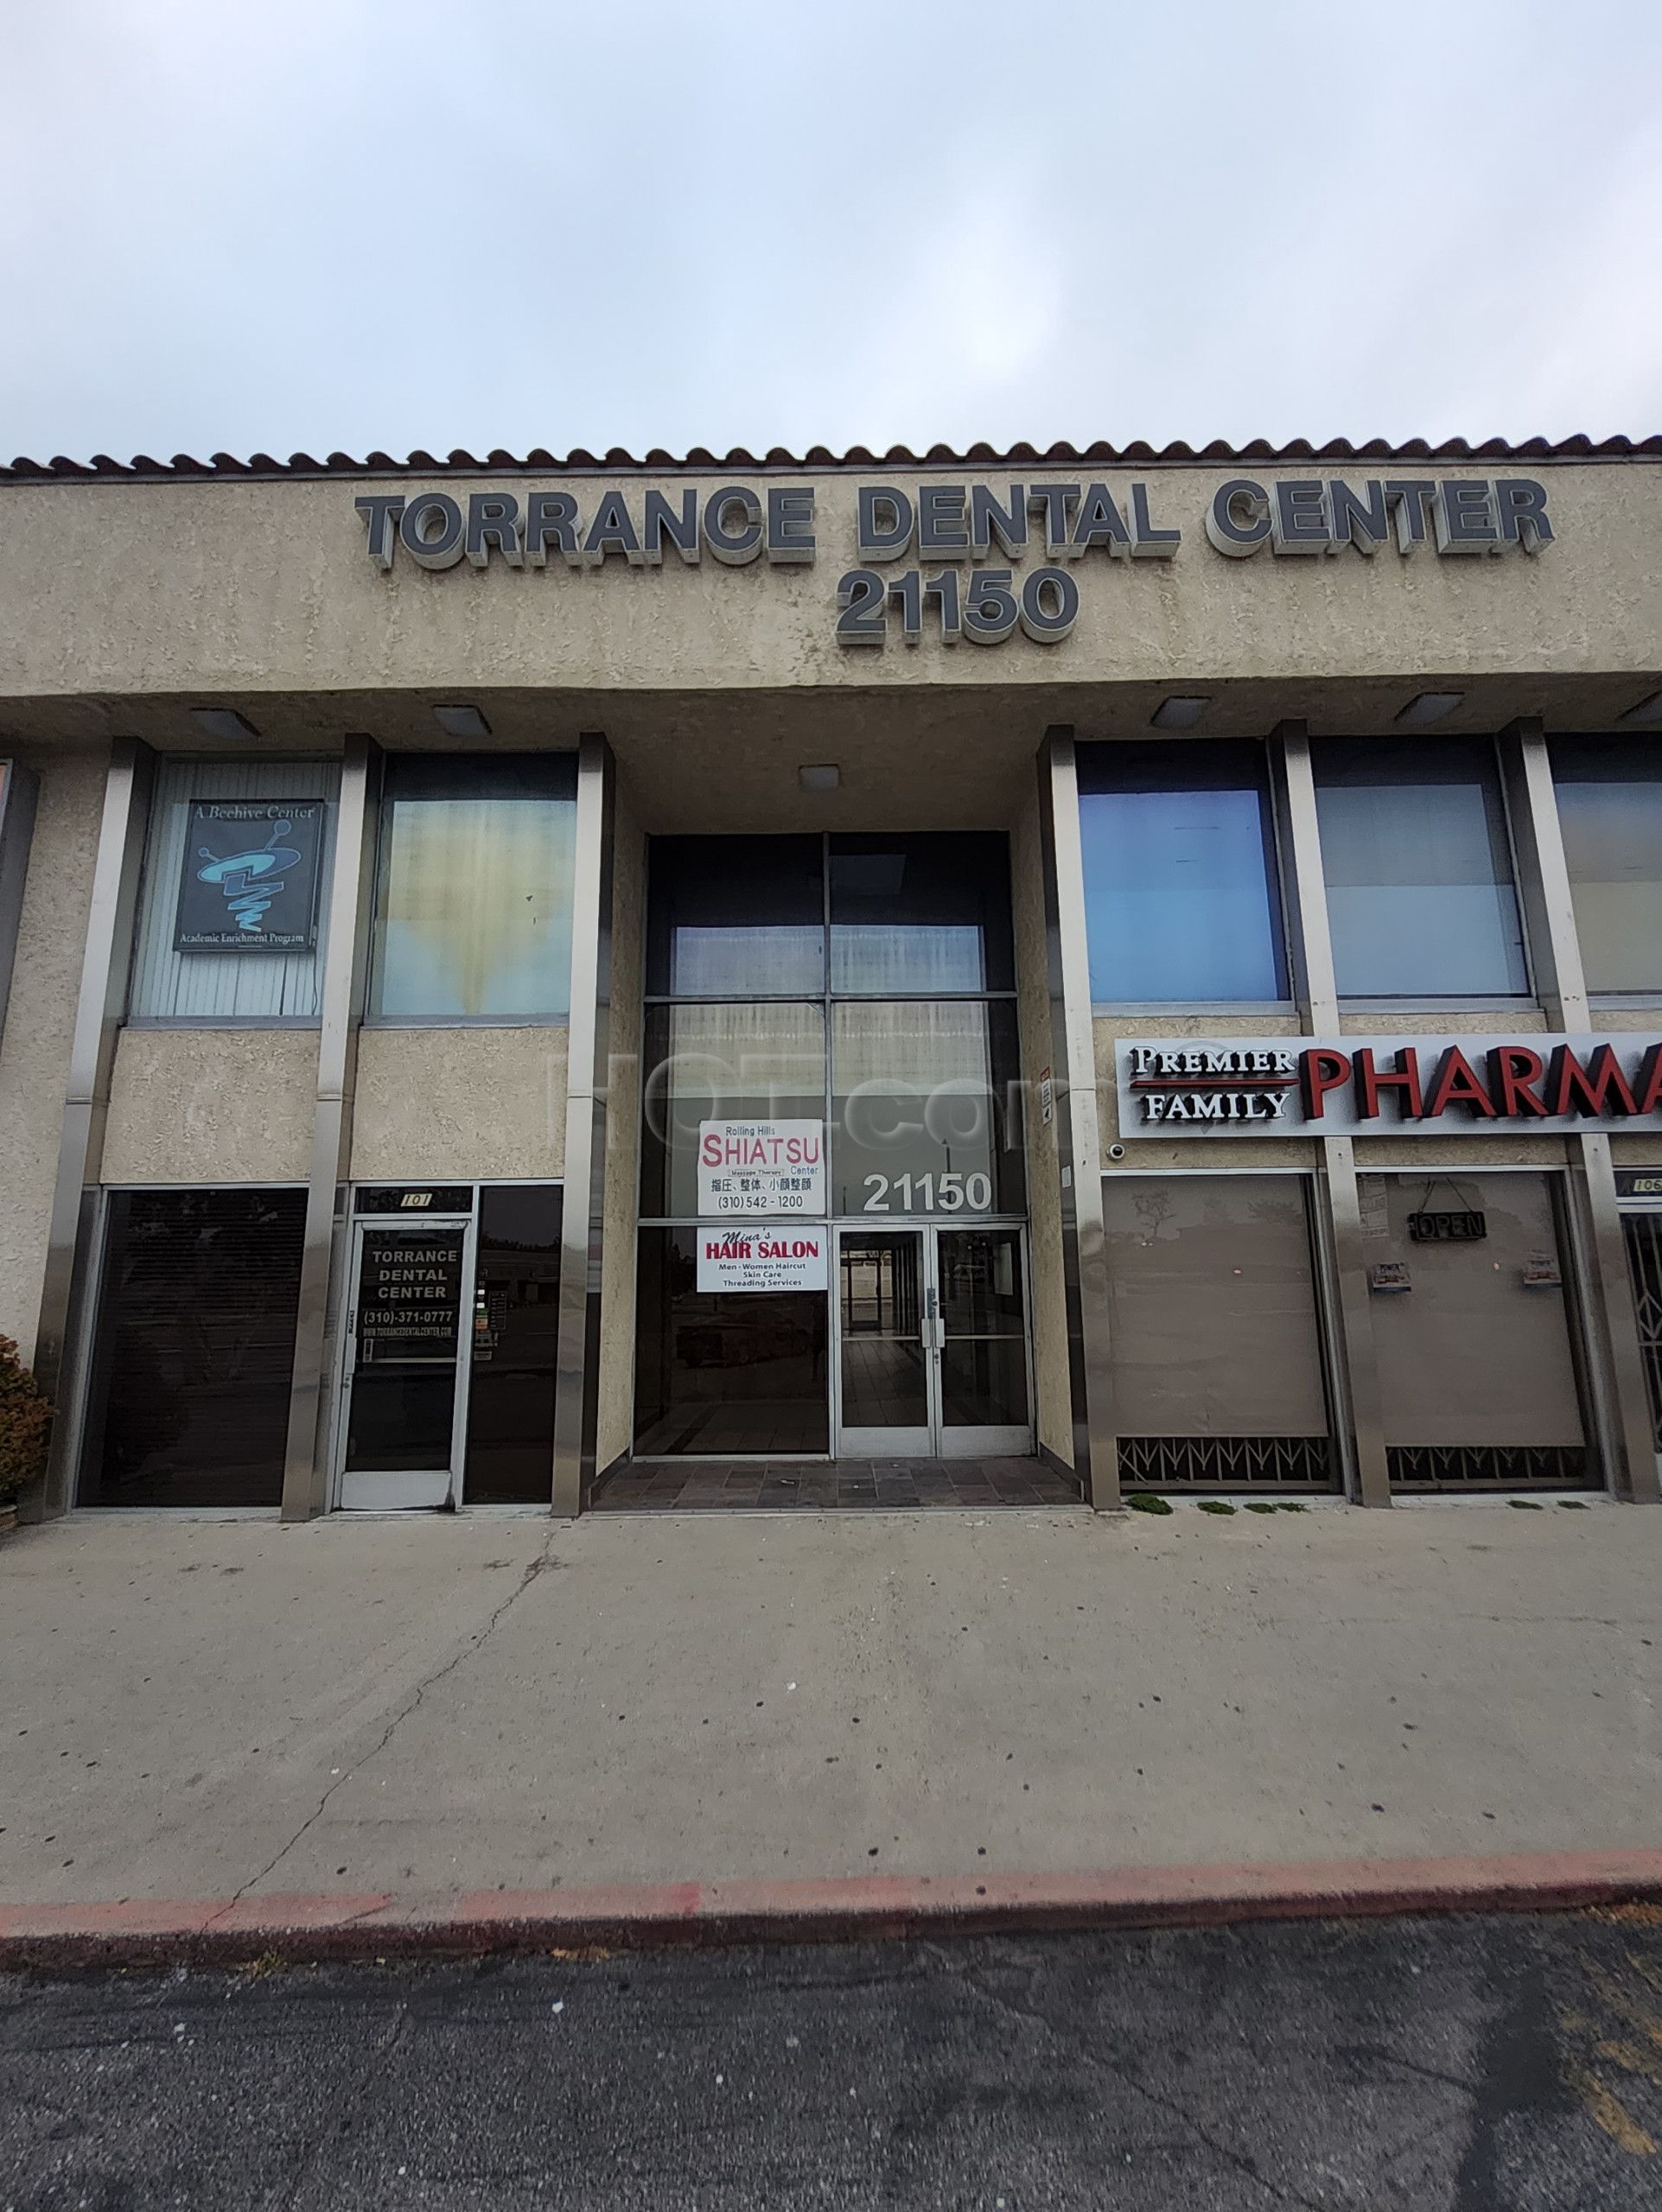 Torrance, California Rolling Hills Shiatsu Center